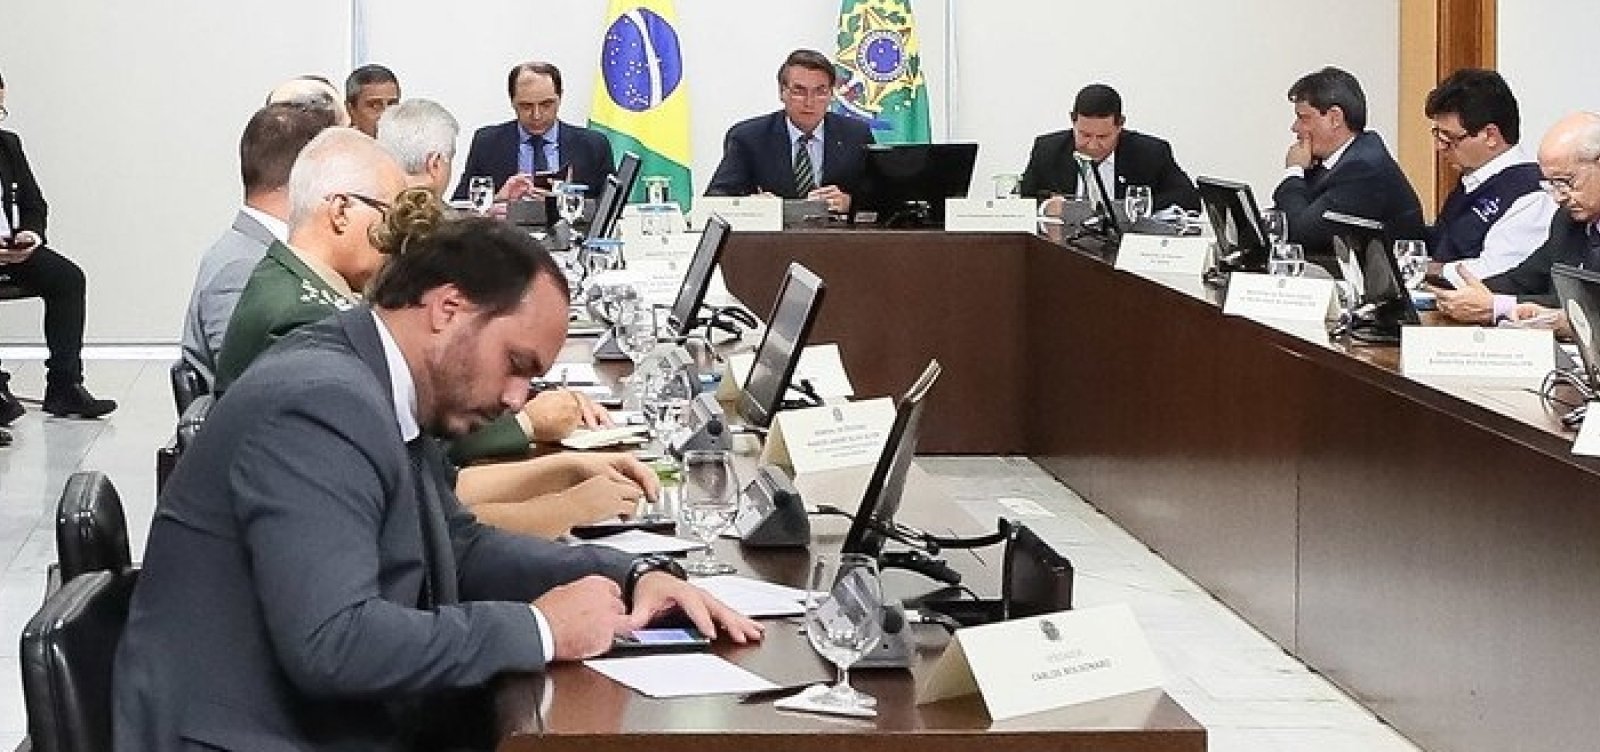 Discurso de Bolsonaro foi montado por Carlos e núcleo ideológico do Planalto